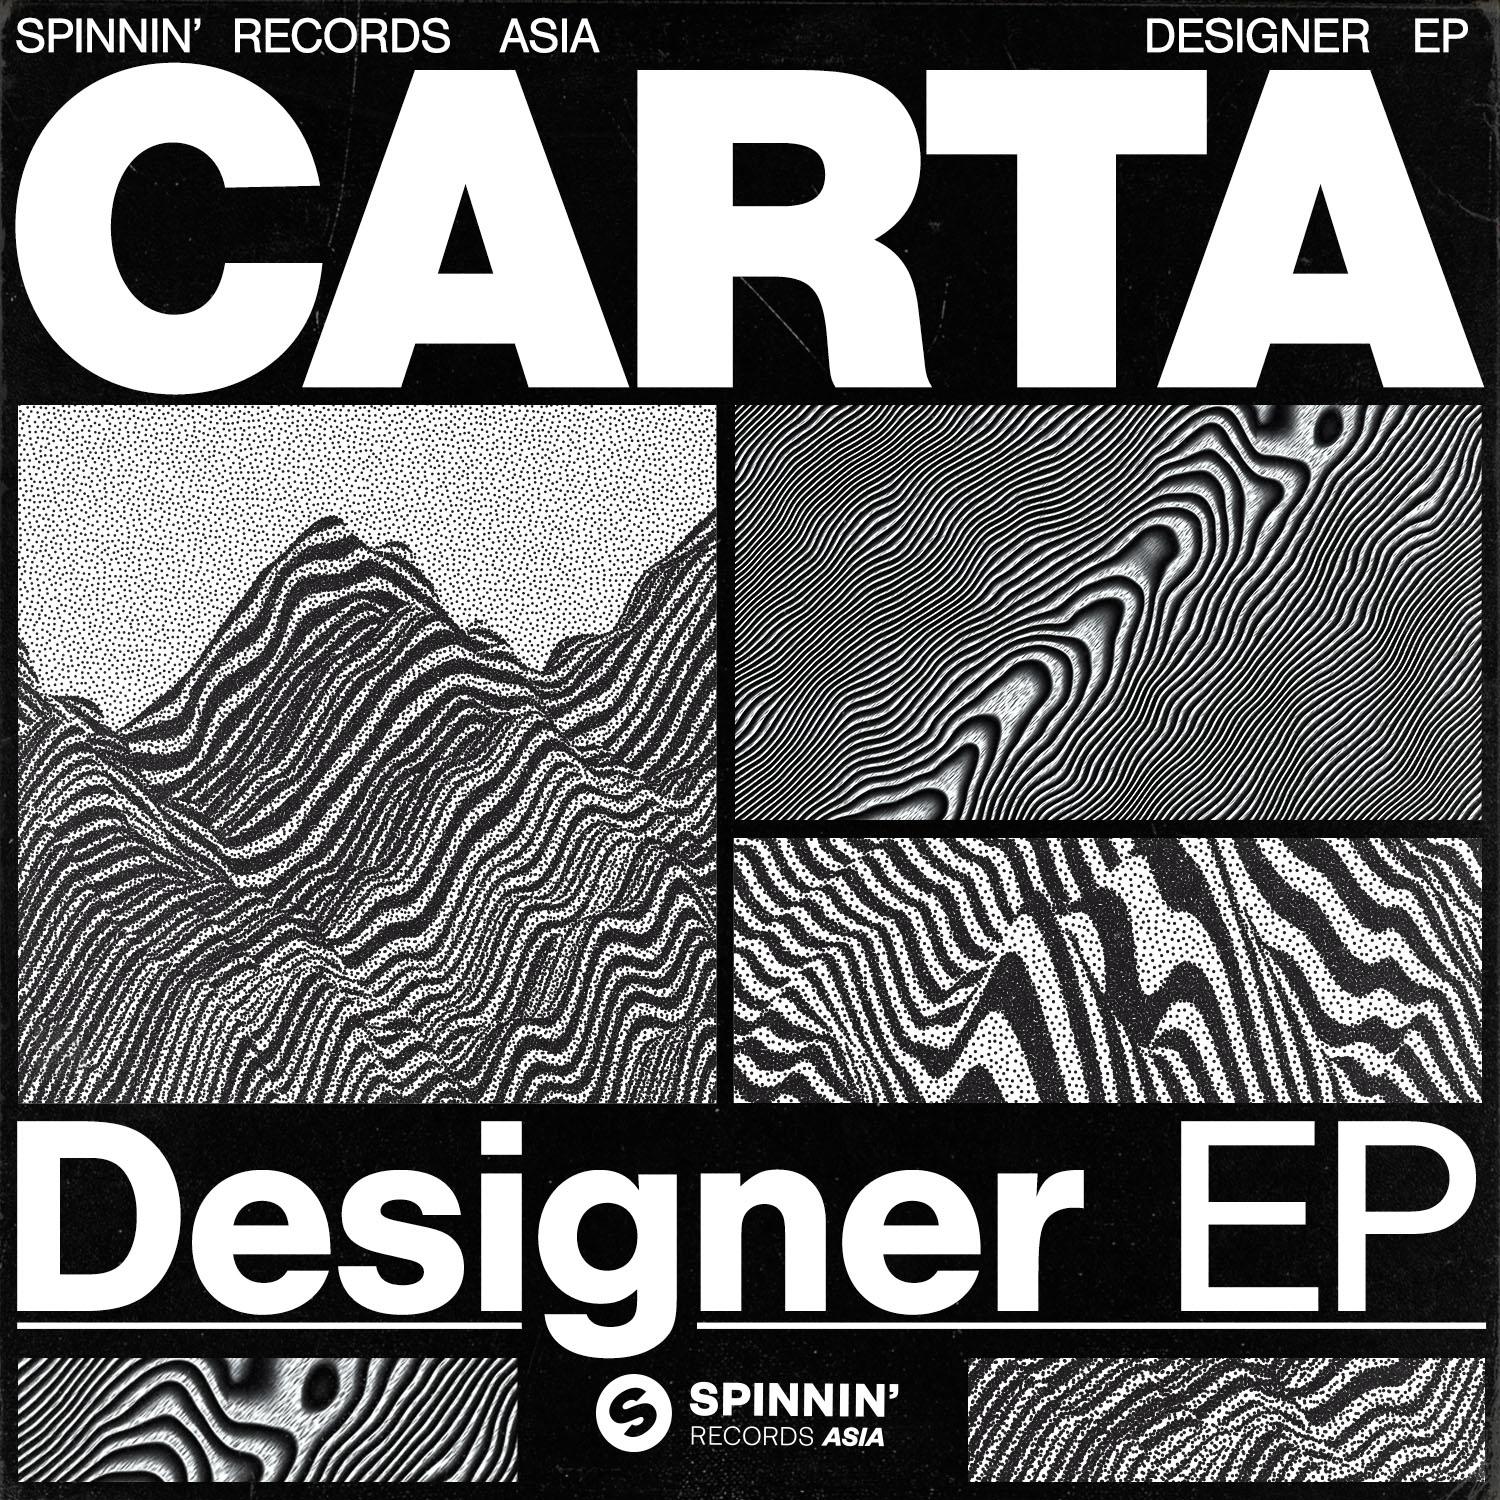 Designer EP专辑